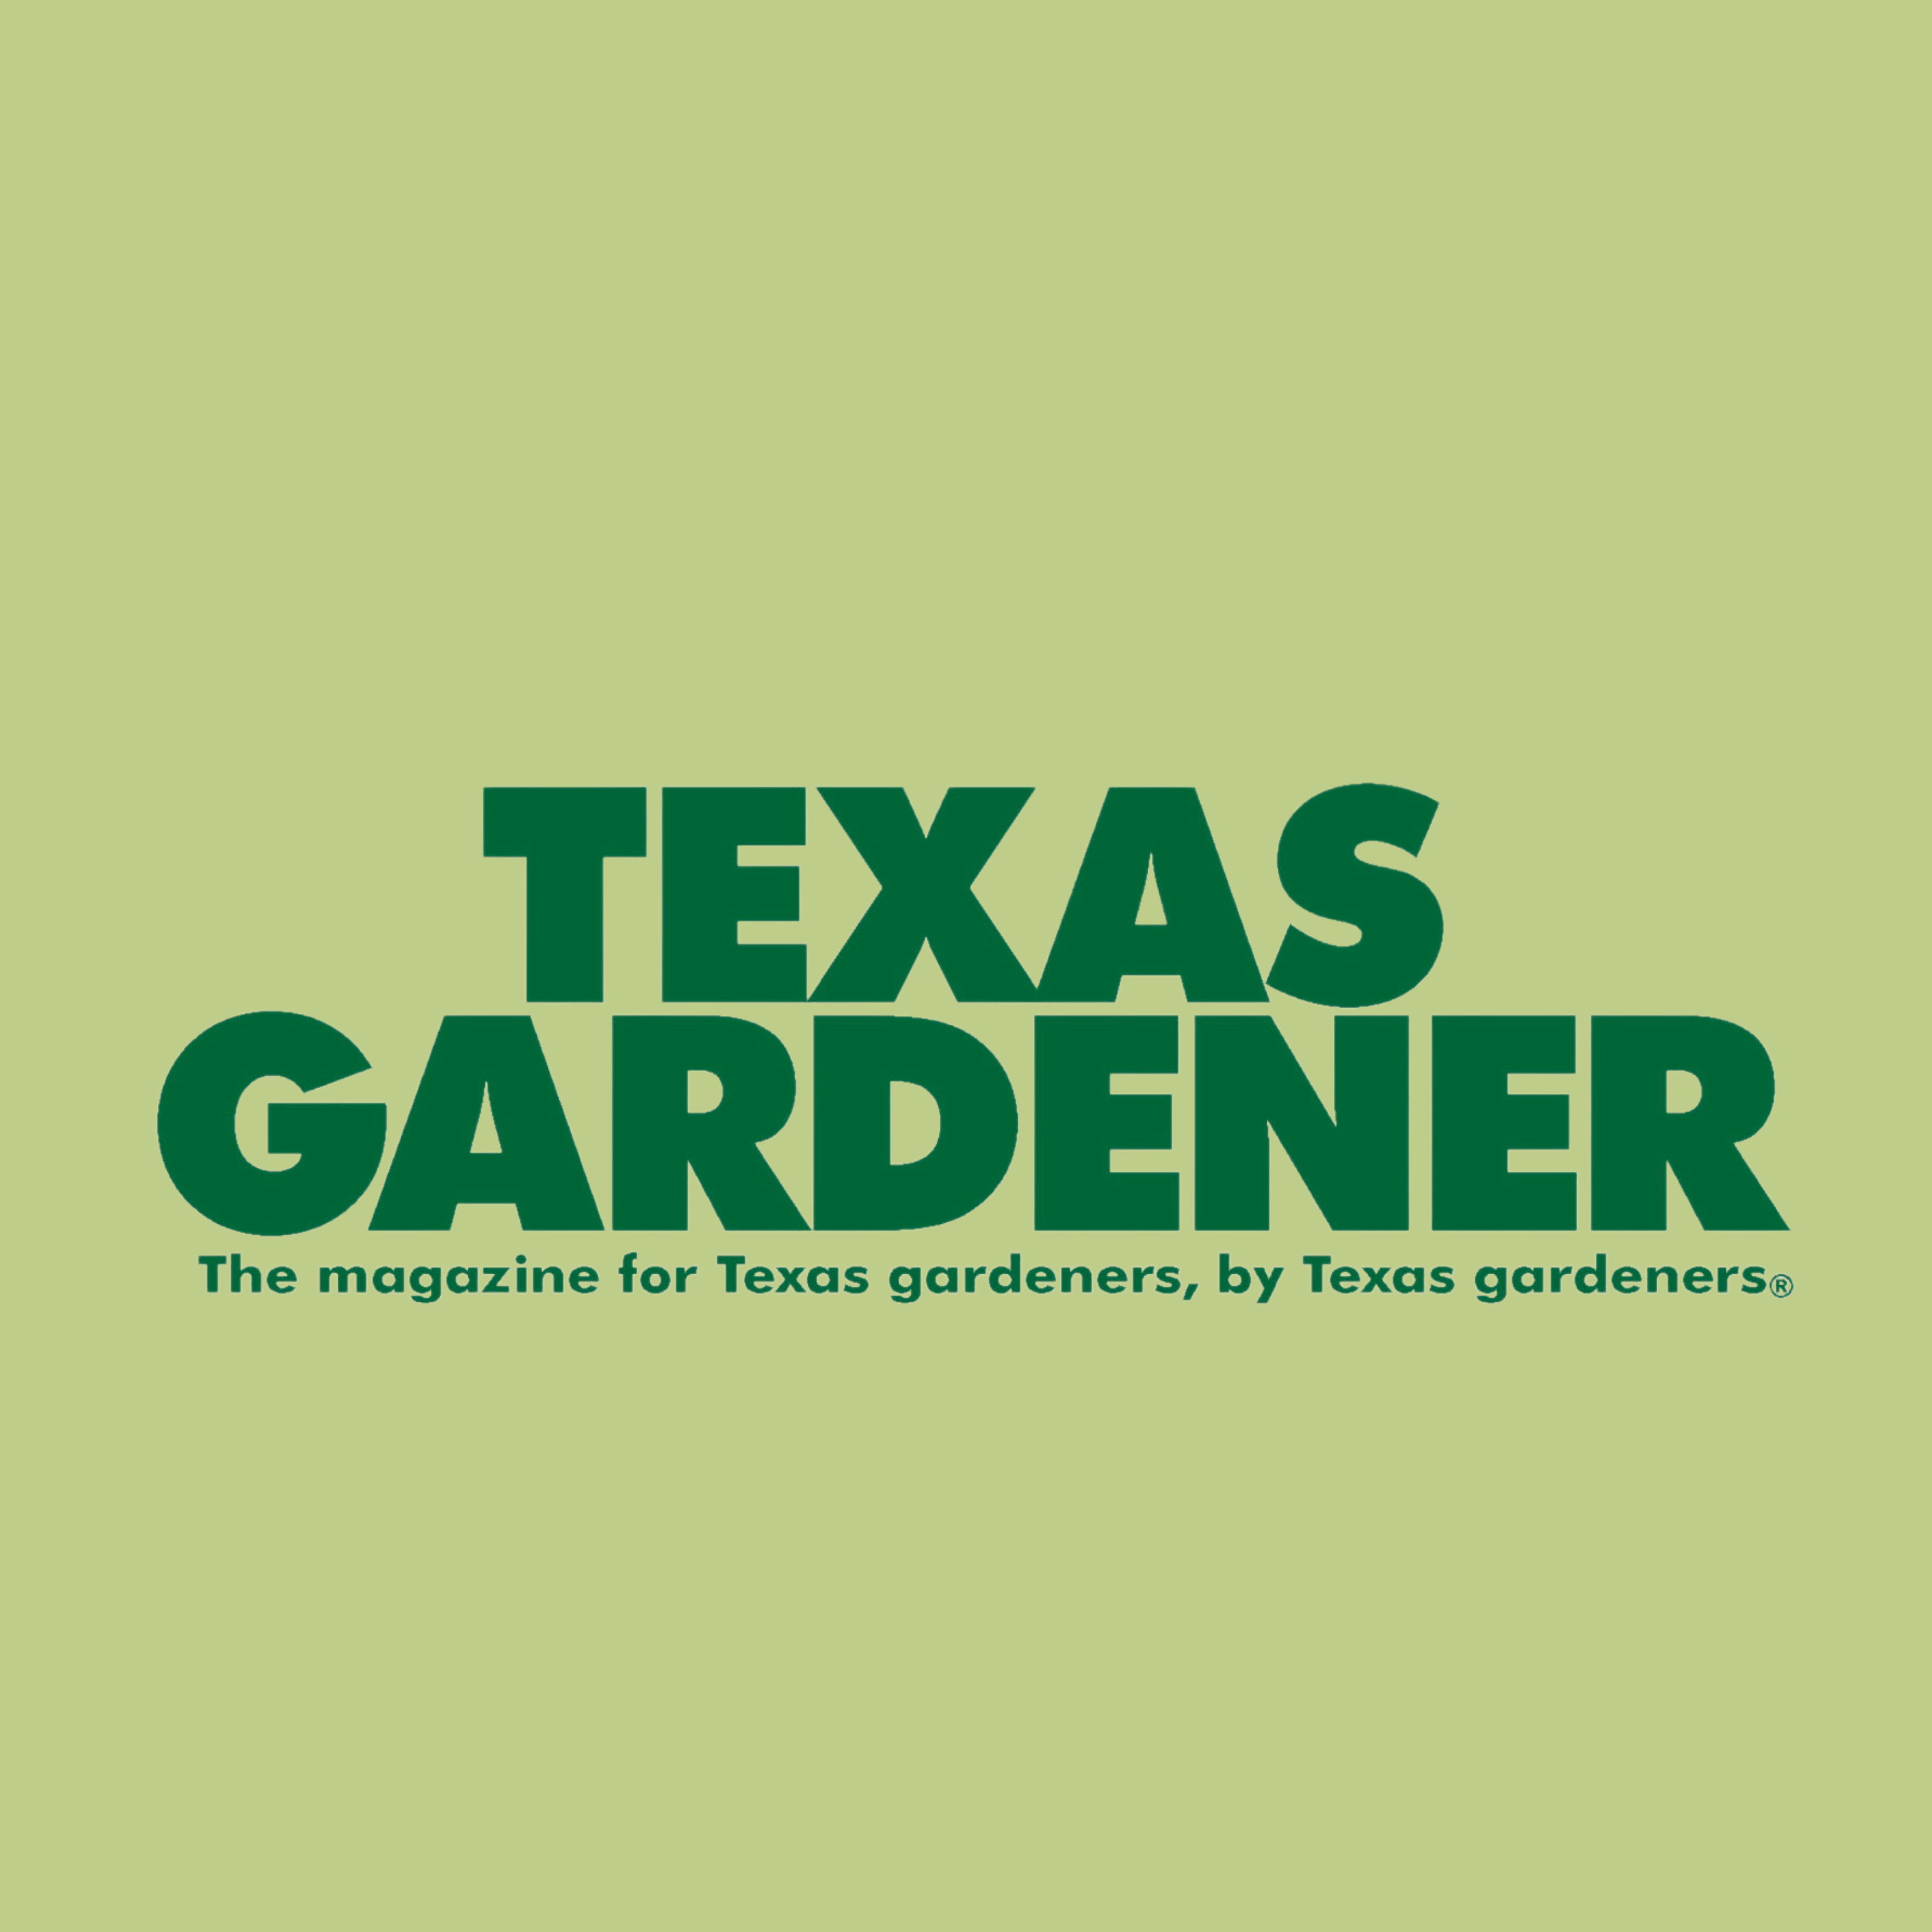 Texas Gardener magazine